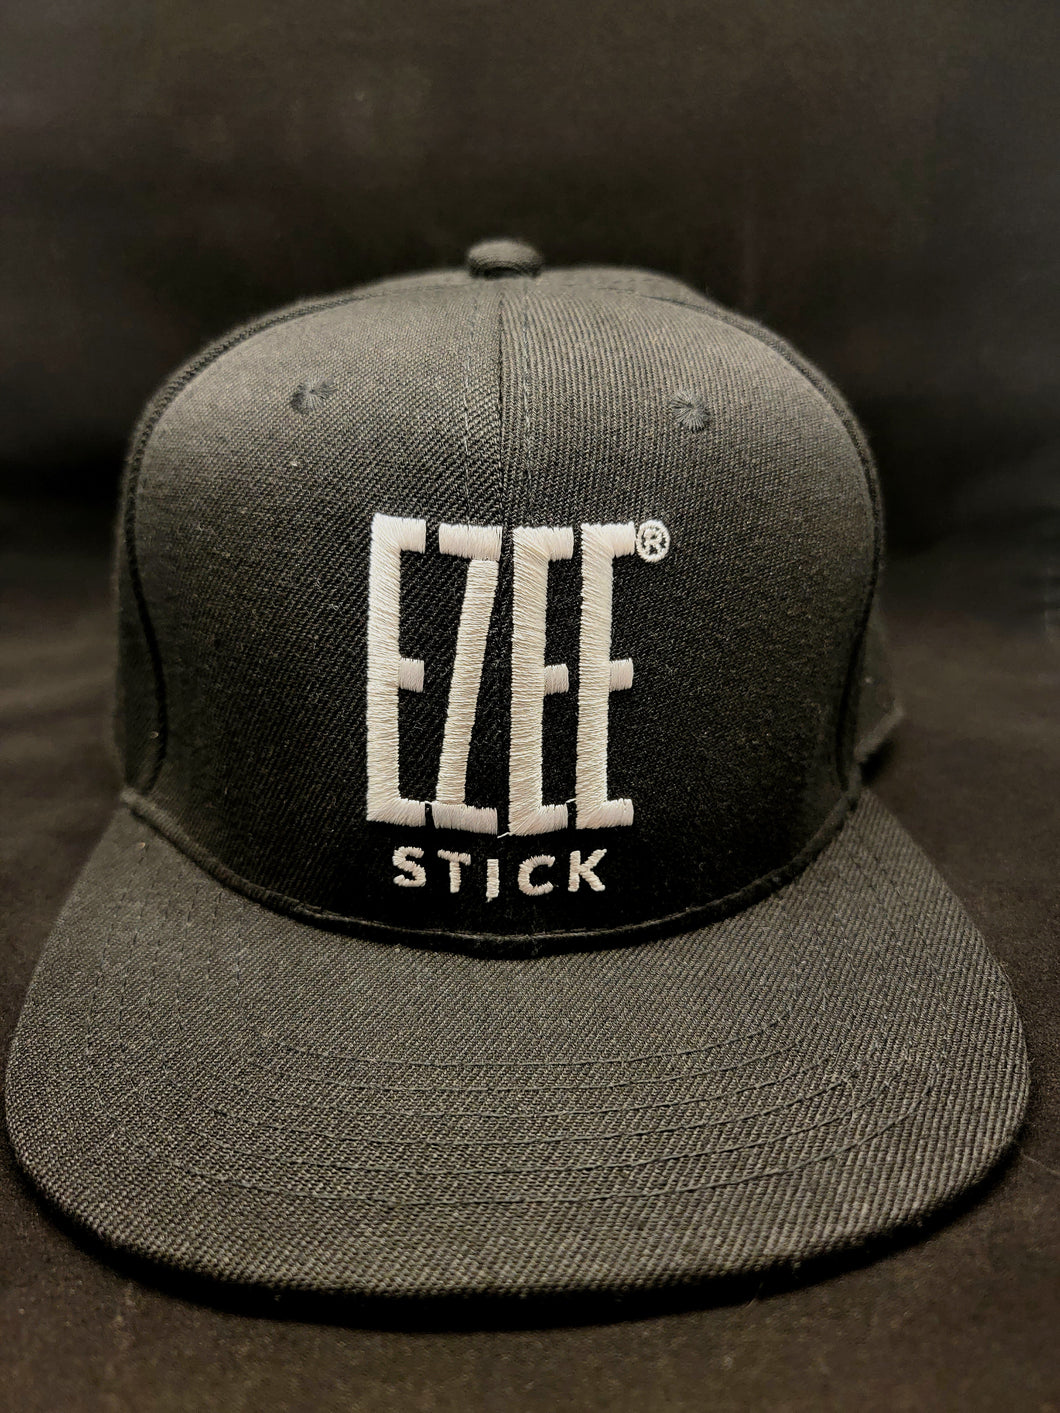 Ezee Stick Black Snap Back Hat